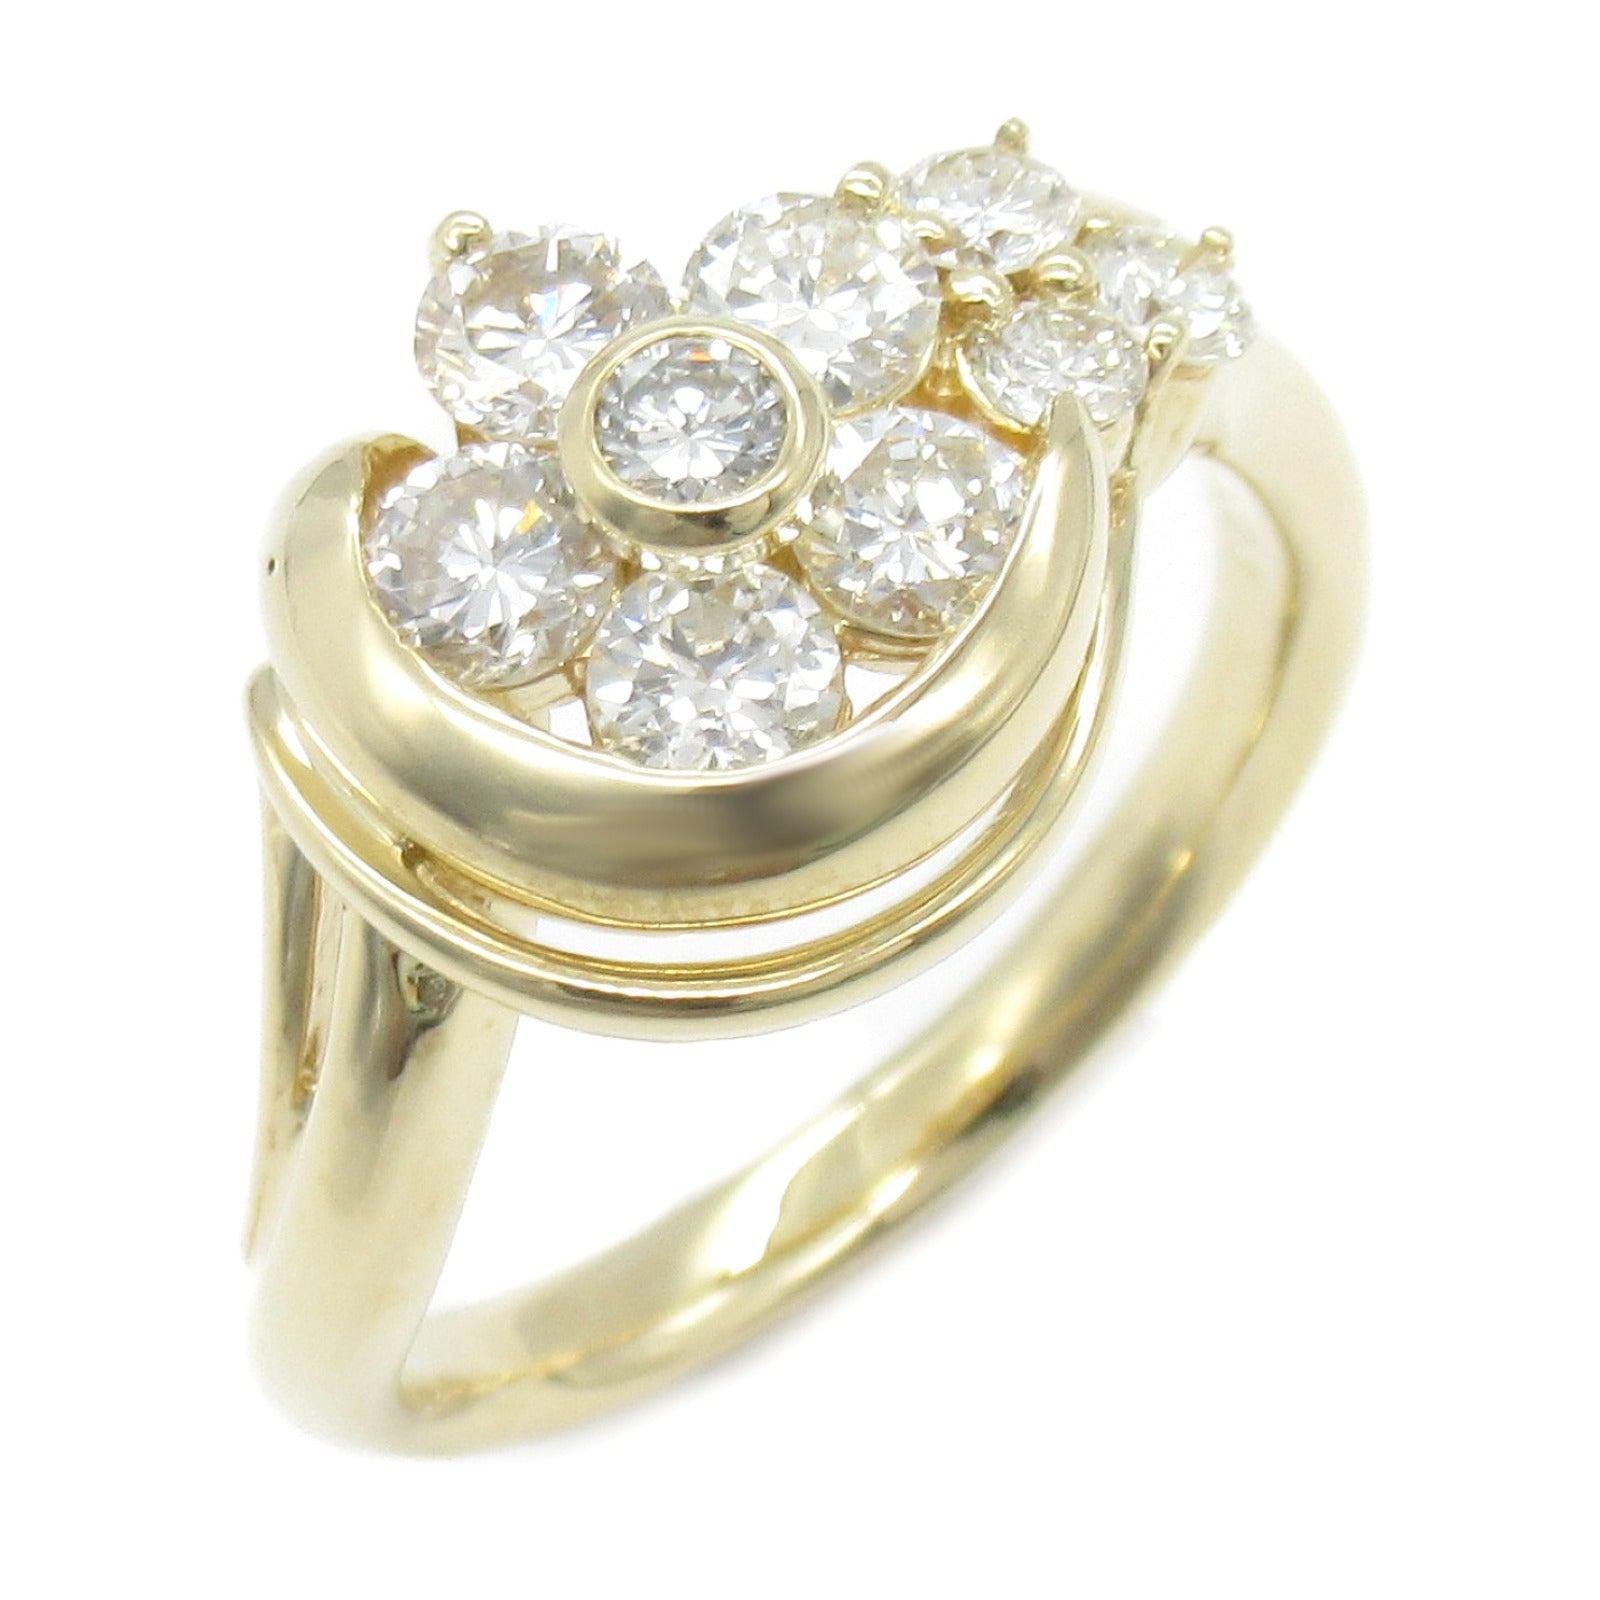 Jewelry Jewelry Diamond Ring Ring Ring Jewelry K18 (yellow g) Diamond  Clear Diamond 6.4g